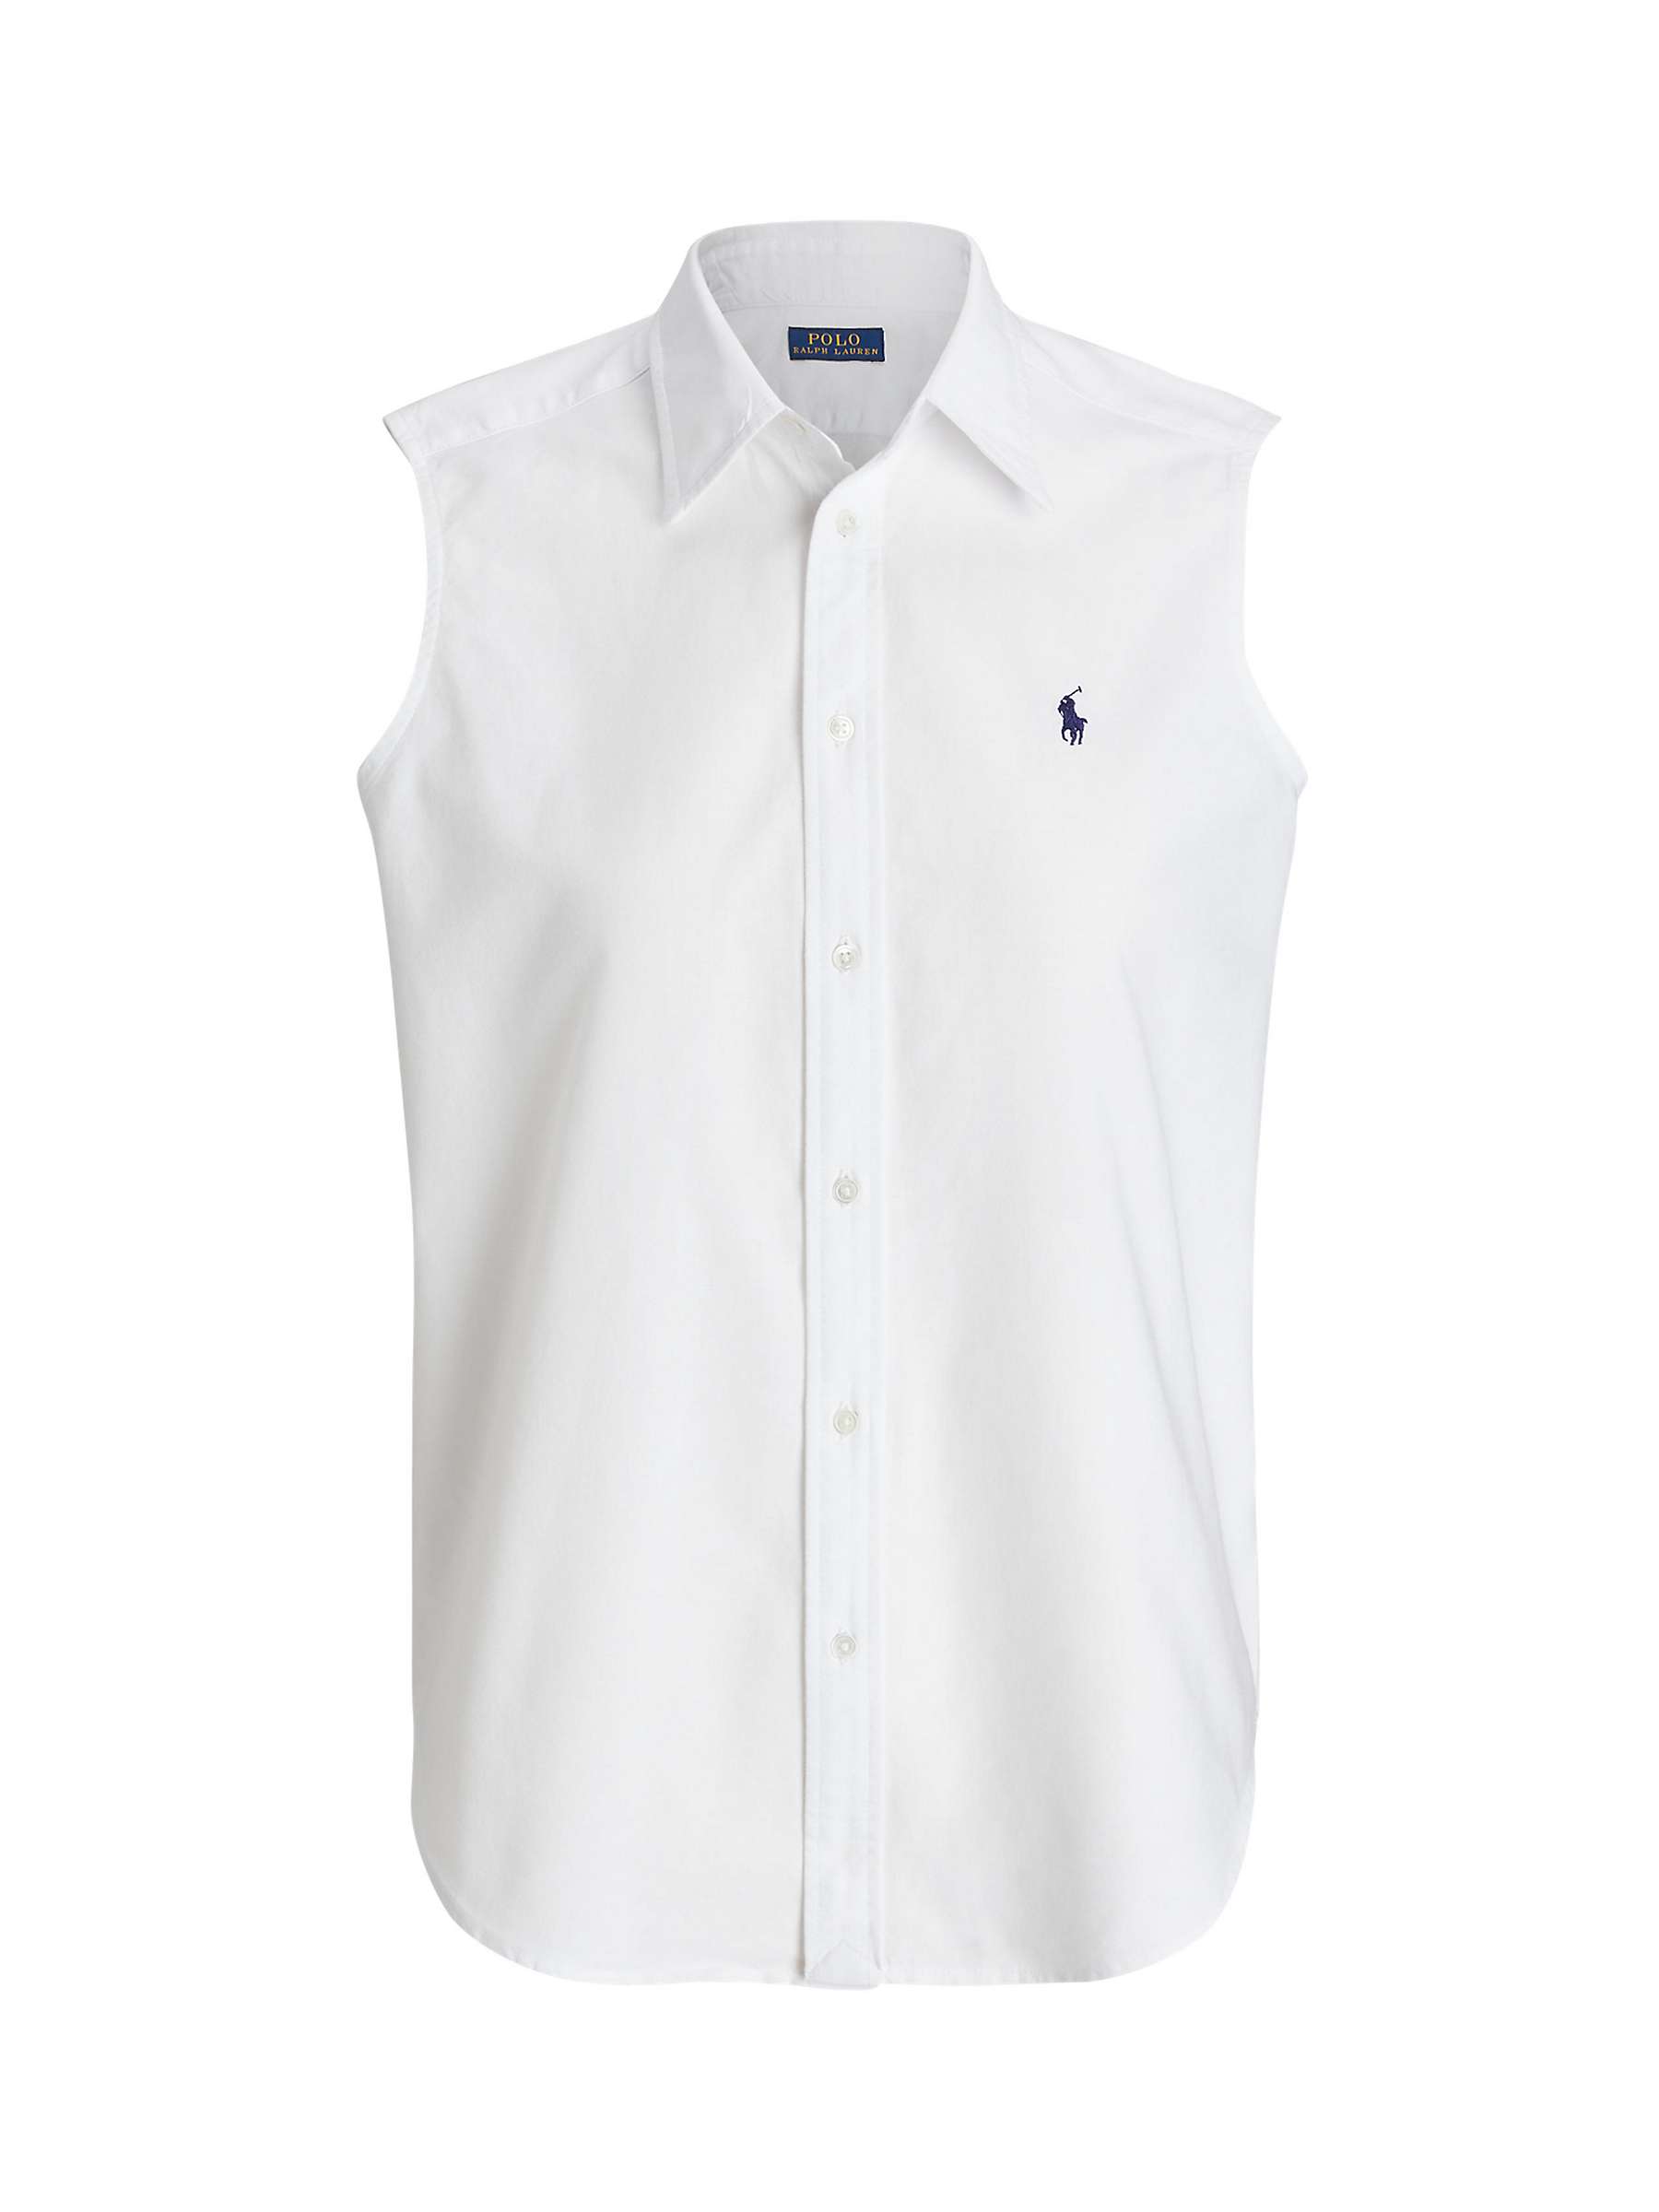 Buy Polo Ralph Lauren Sleeveless Cotton Shirt, White Online at johnlewis.com